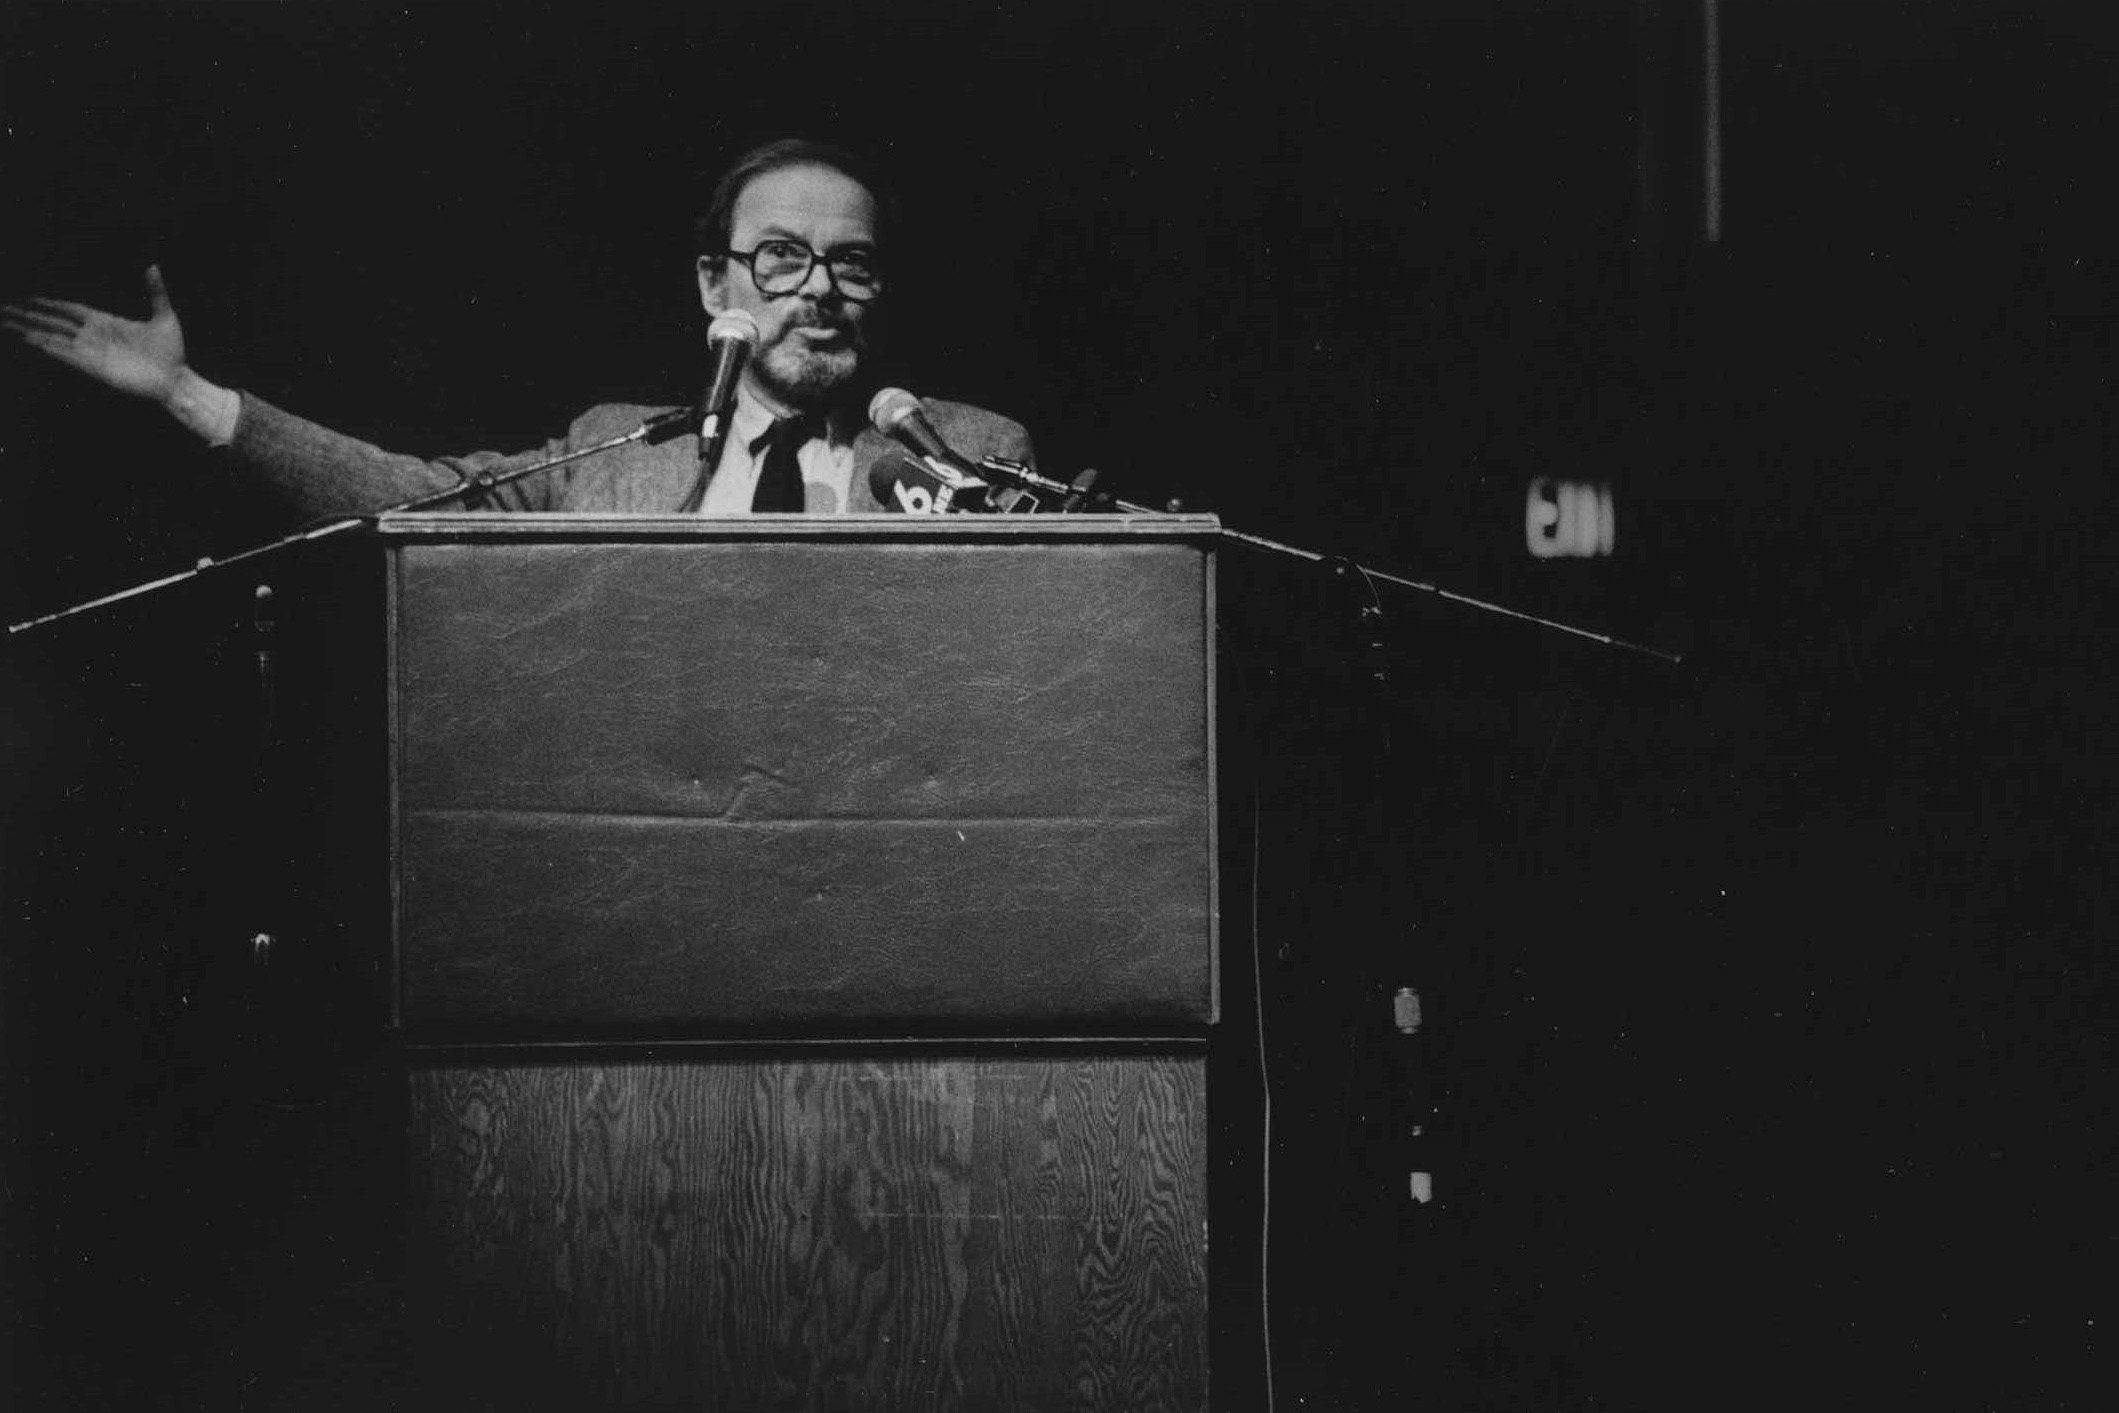 Maurice Sendak at the podium